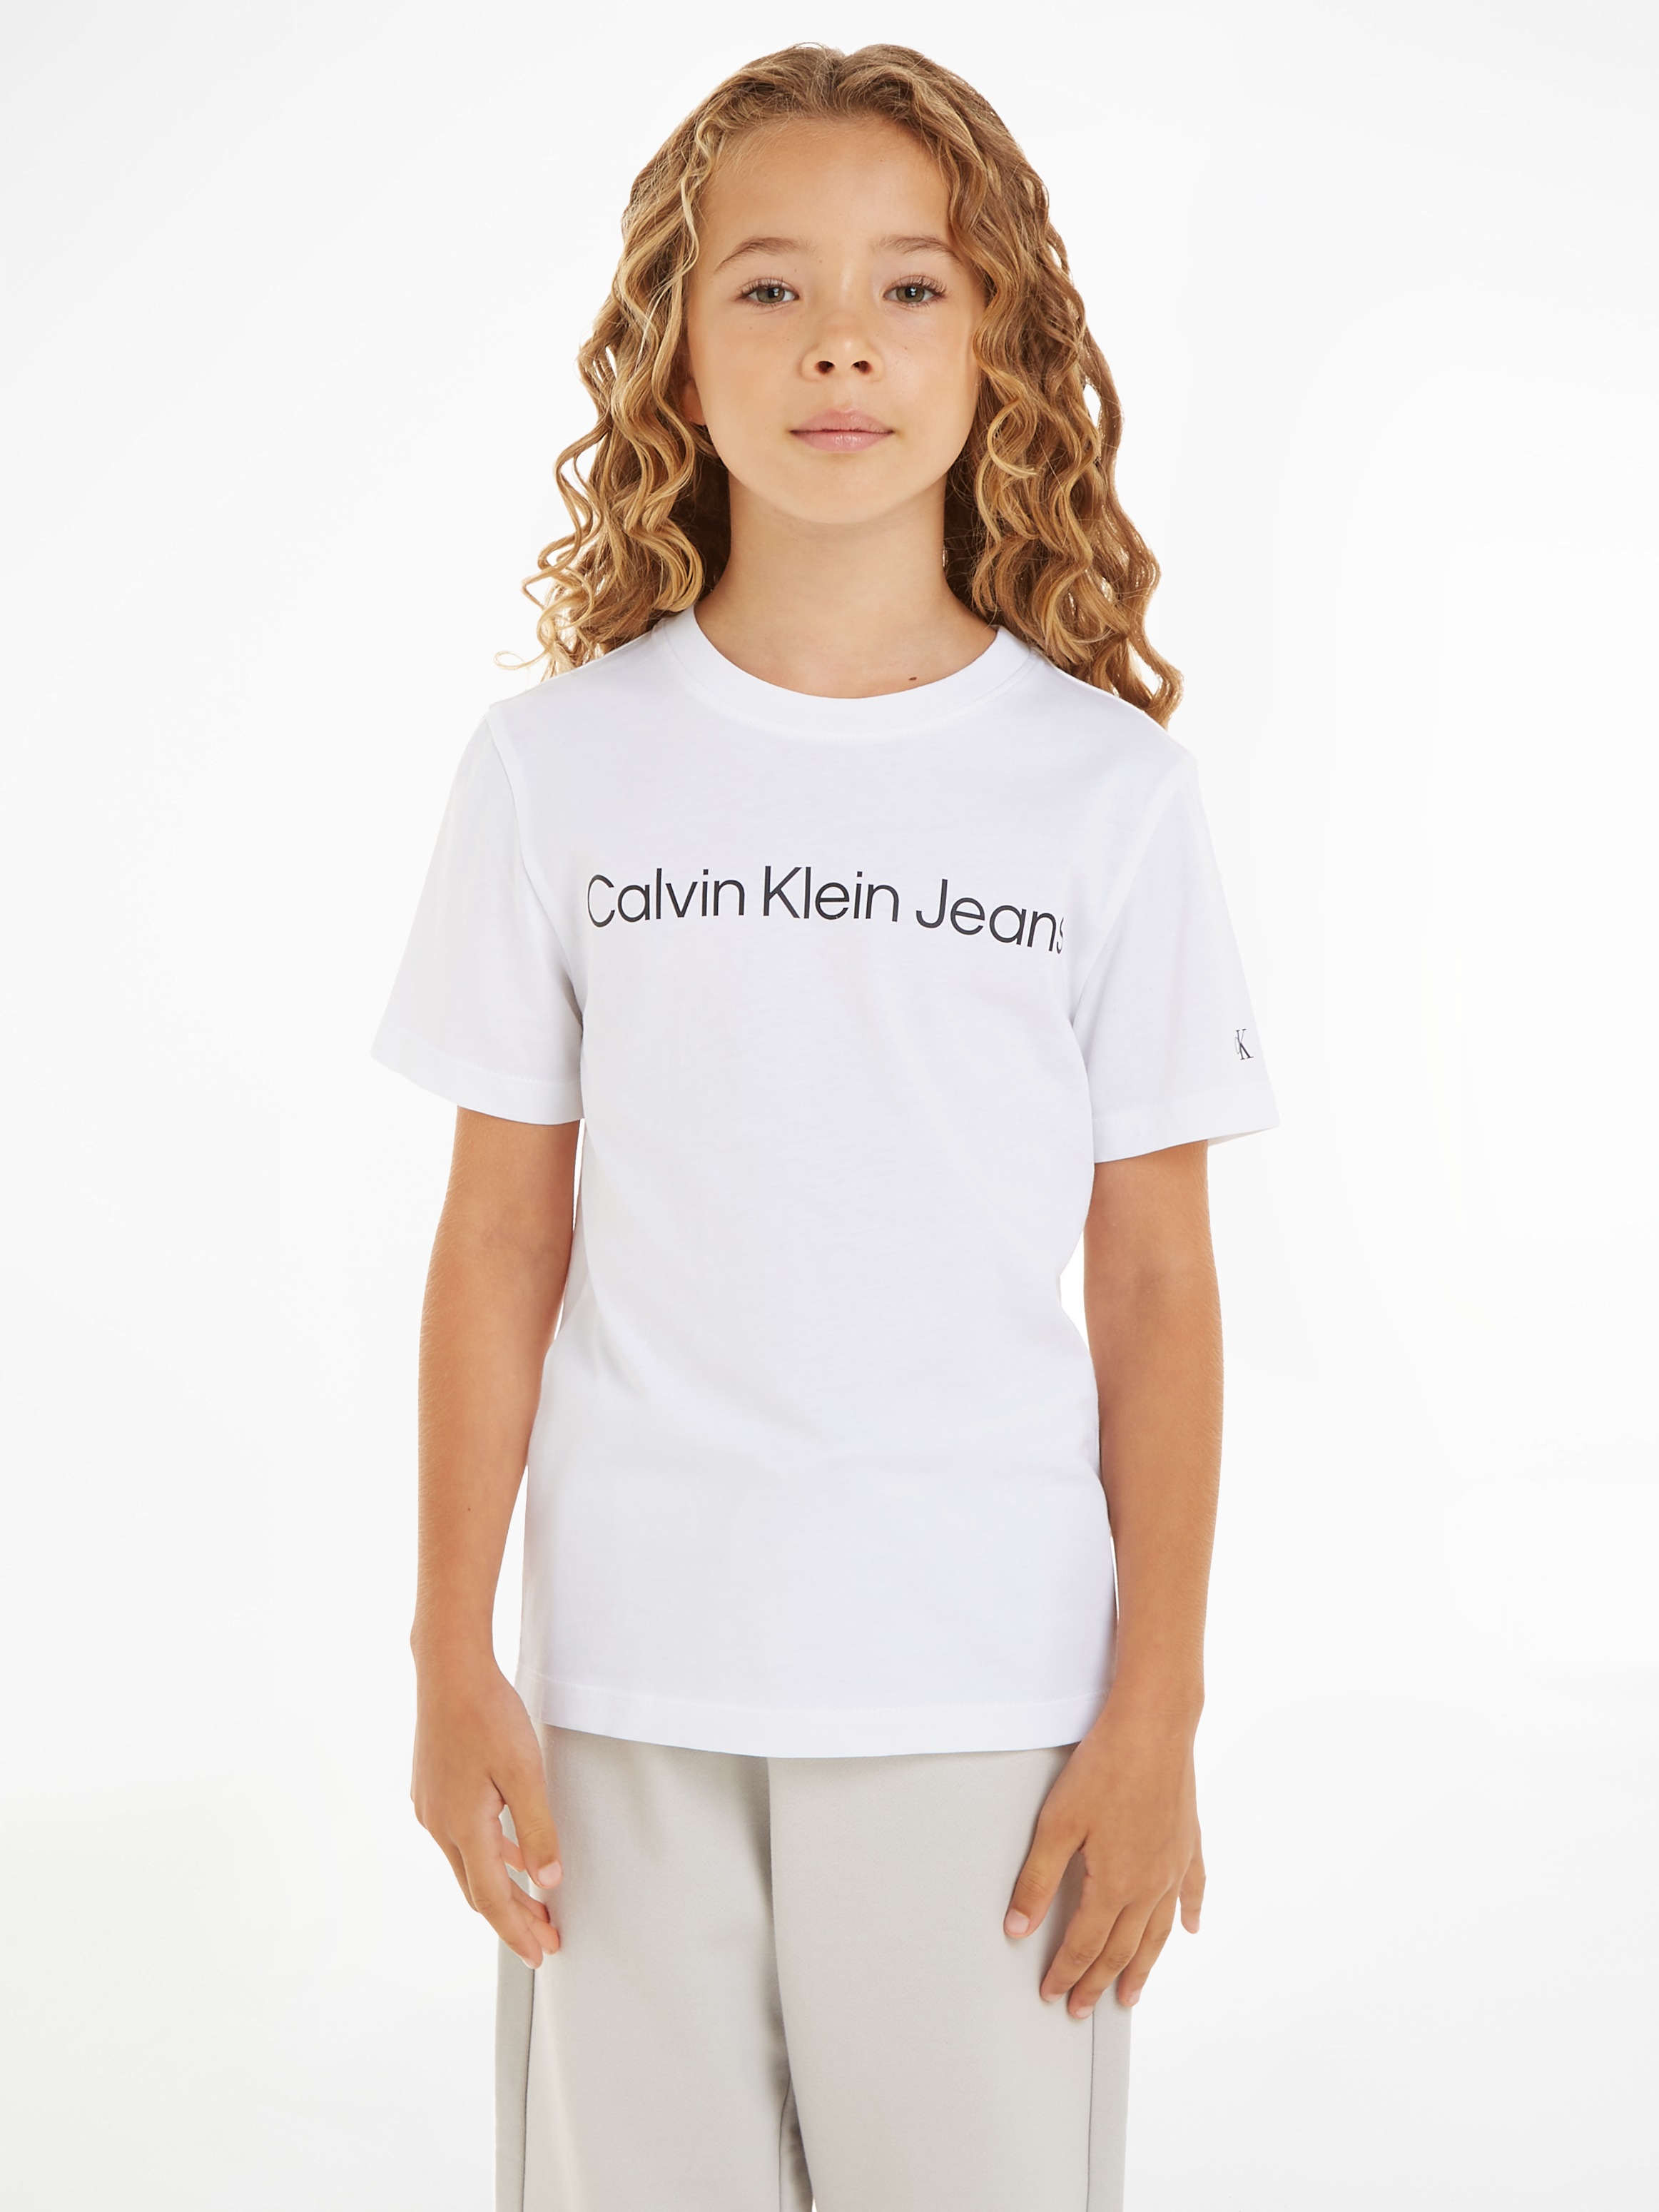 Black Friday Calvin Klein Jeans Logoschriftzug BAUR LOGO Sweatshirt T-SHIRT«, SS »INST. | mit